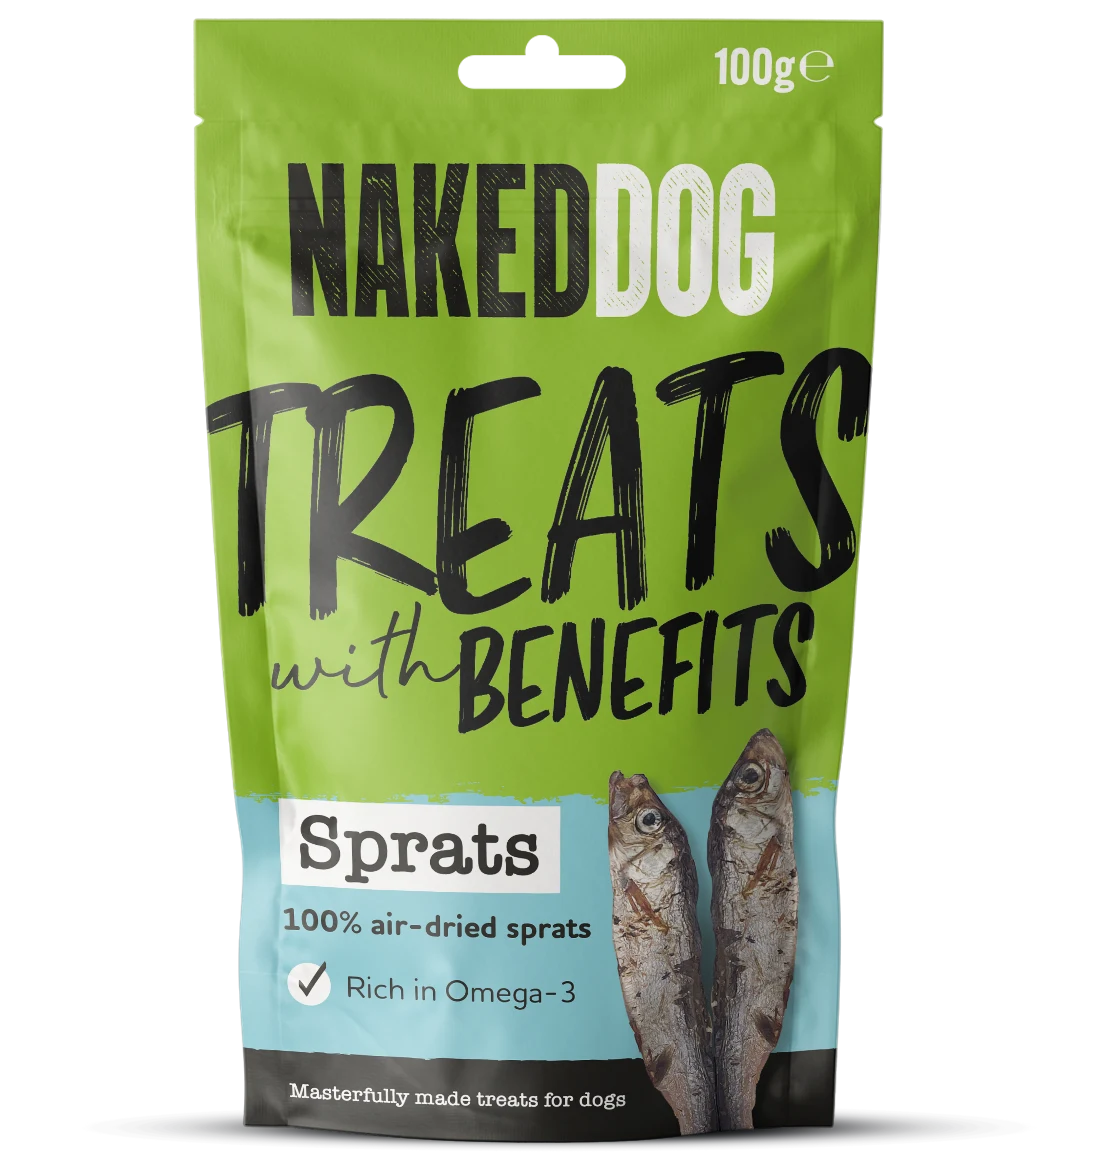 Naked Dog TREATS WITH BENEFITS 100g - Sprats (Case of 6)